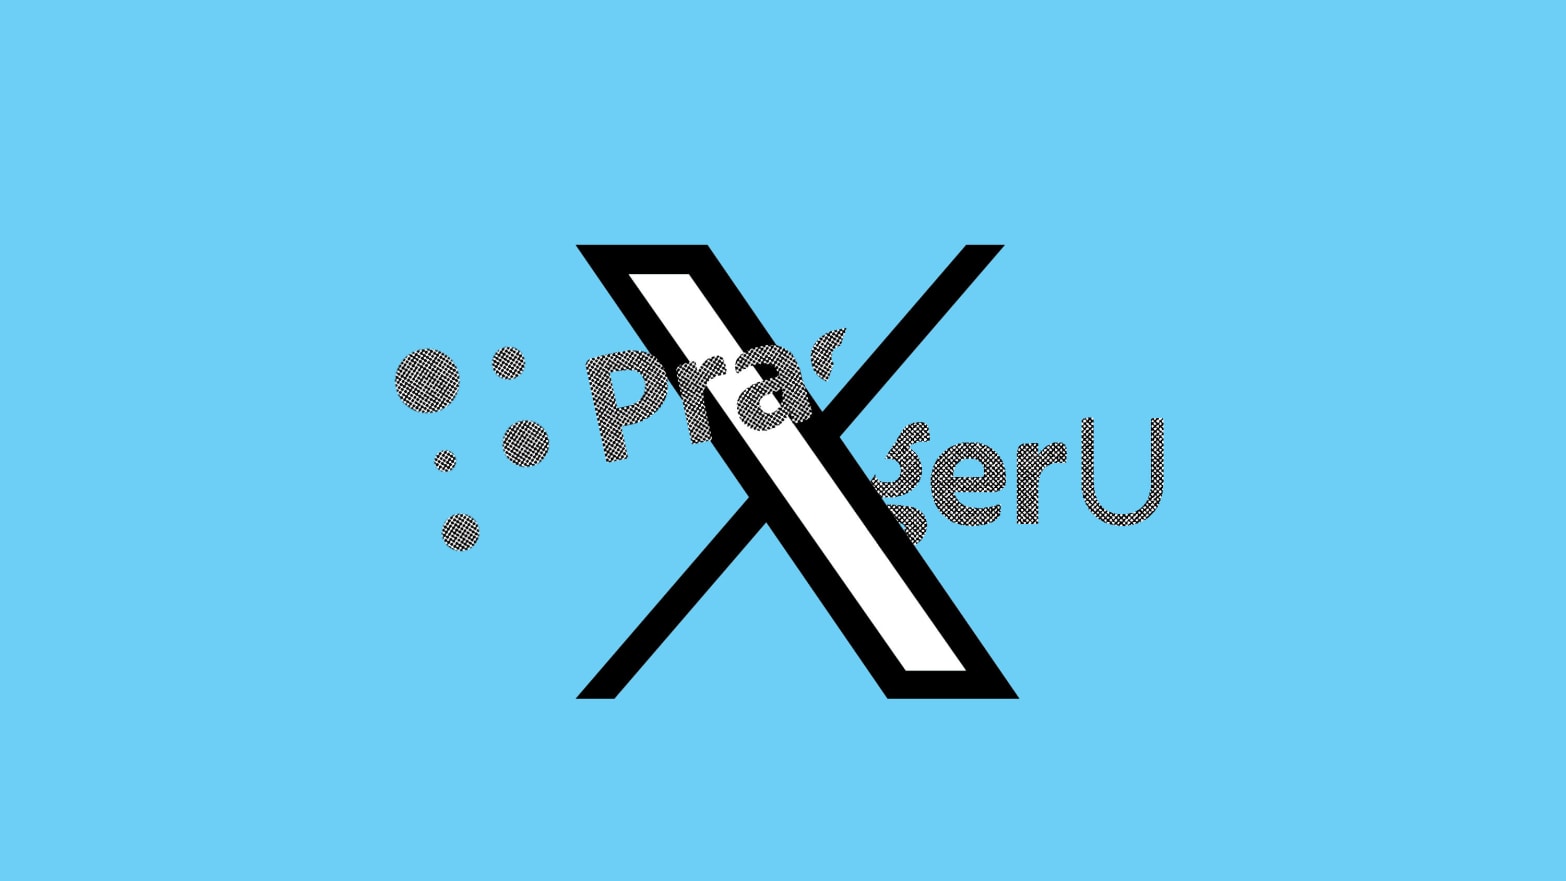 The X logo in between a broken PragerU logo on a blue background